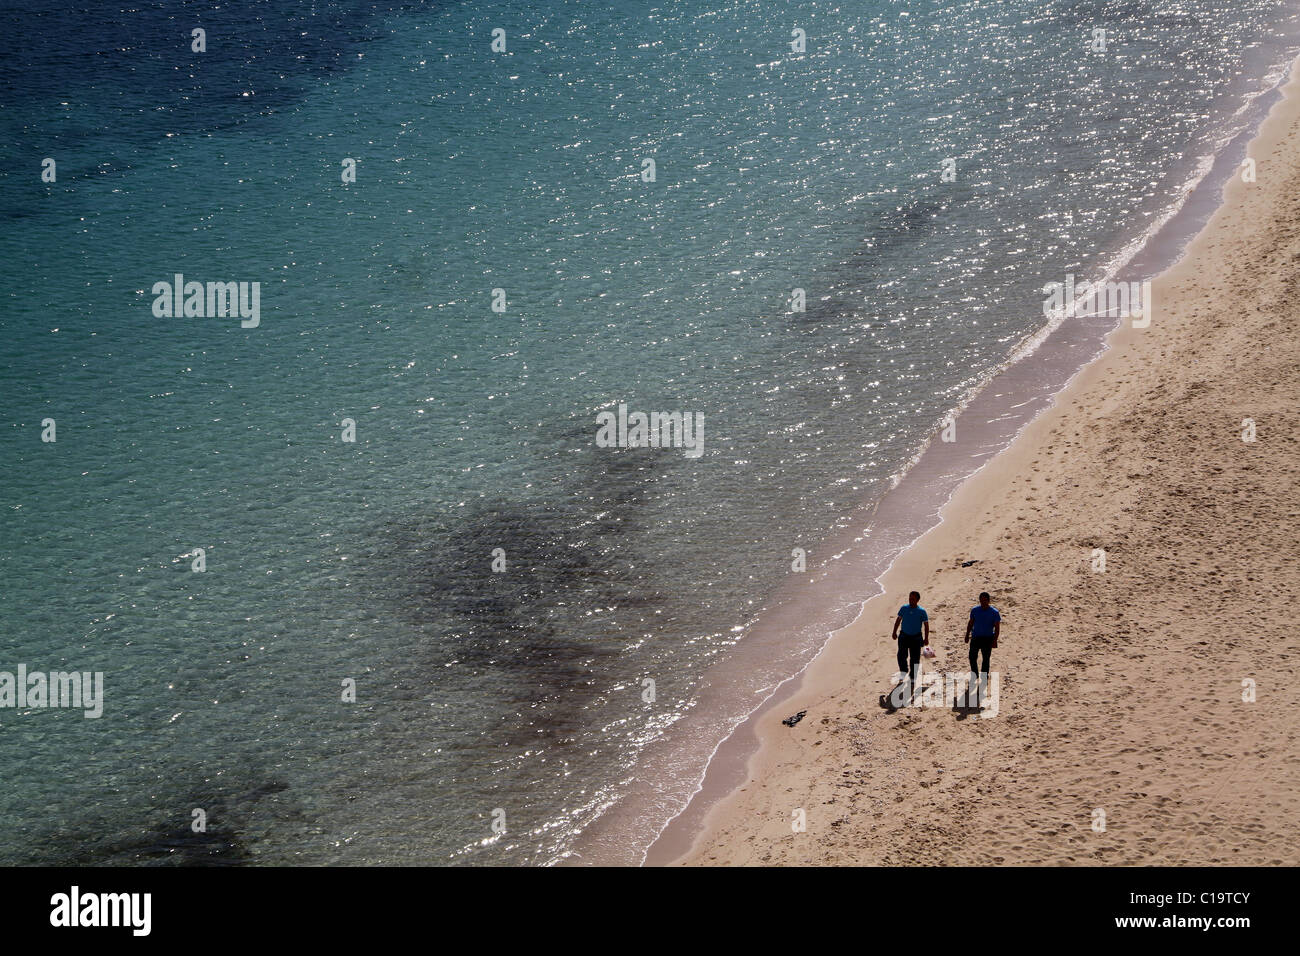 Silhouette of two people walking on the beach at Palma Nova, Majorca. Stock Photo